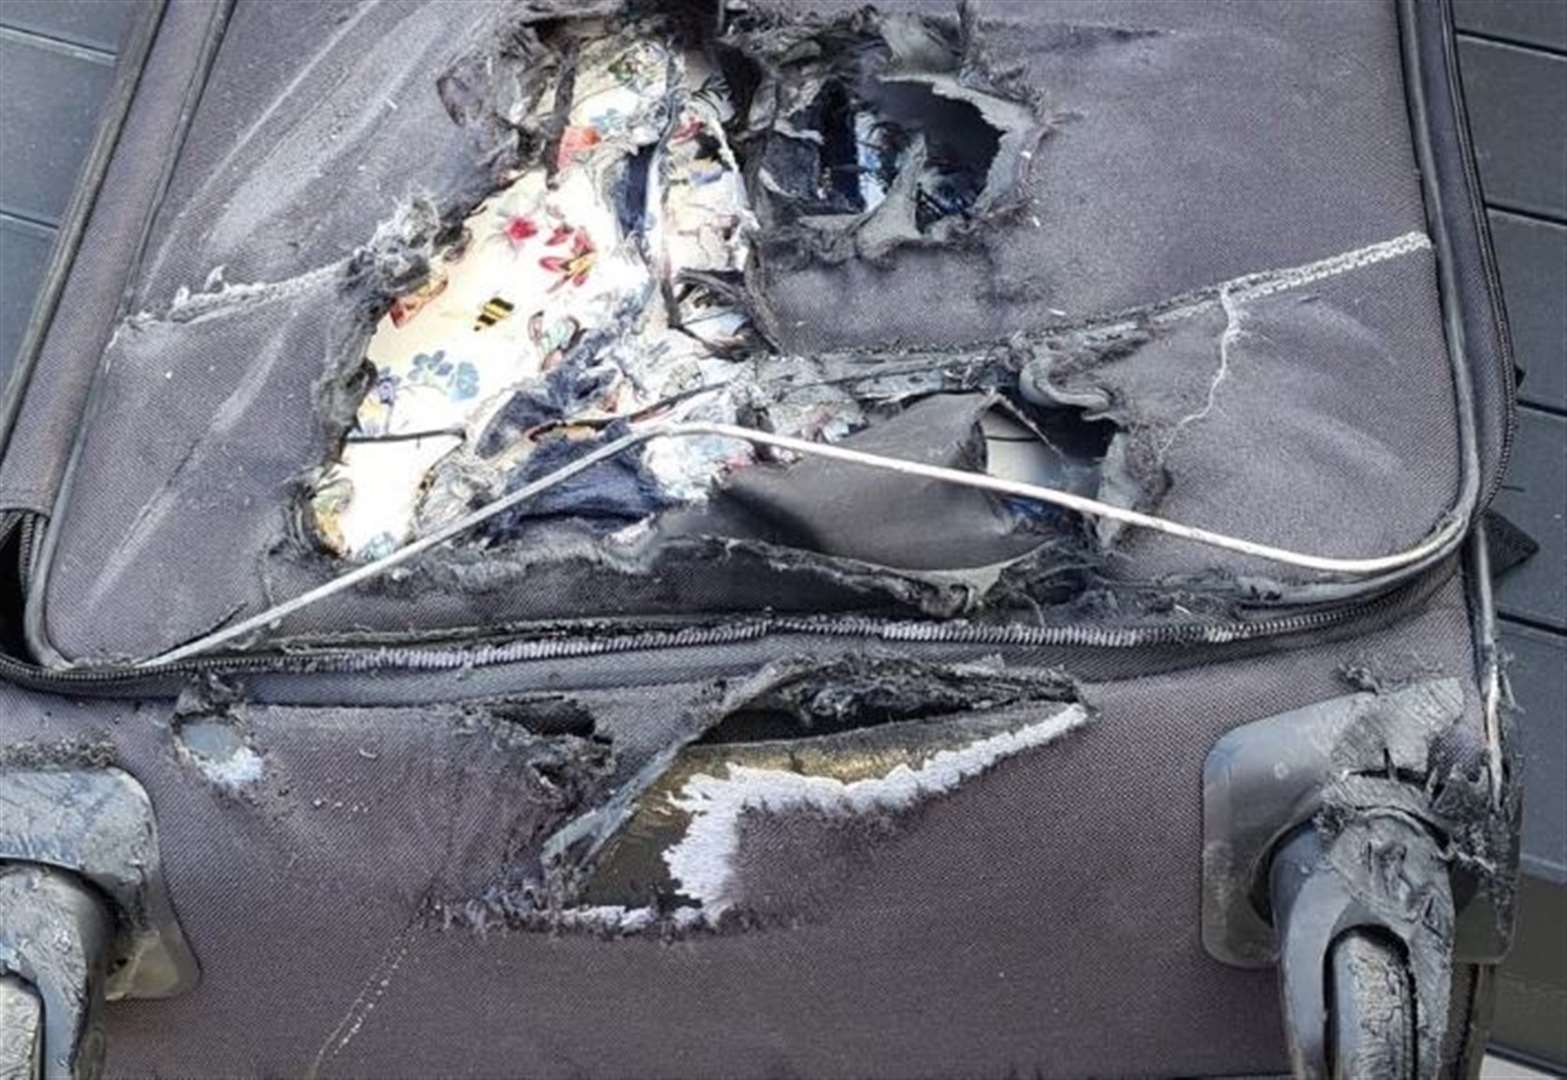 EasyJet passenger's bag shredded with contents destroyed